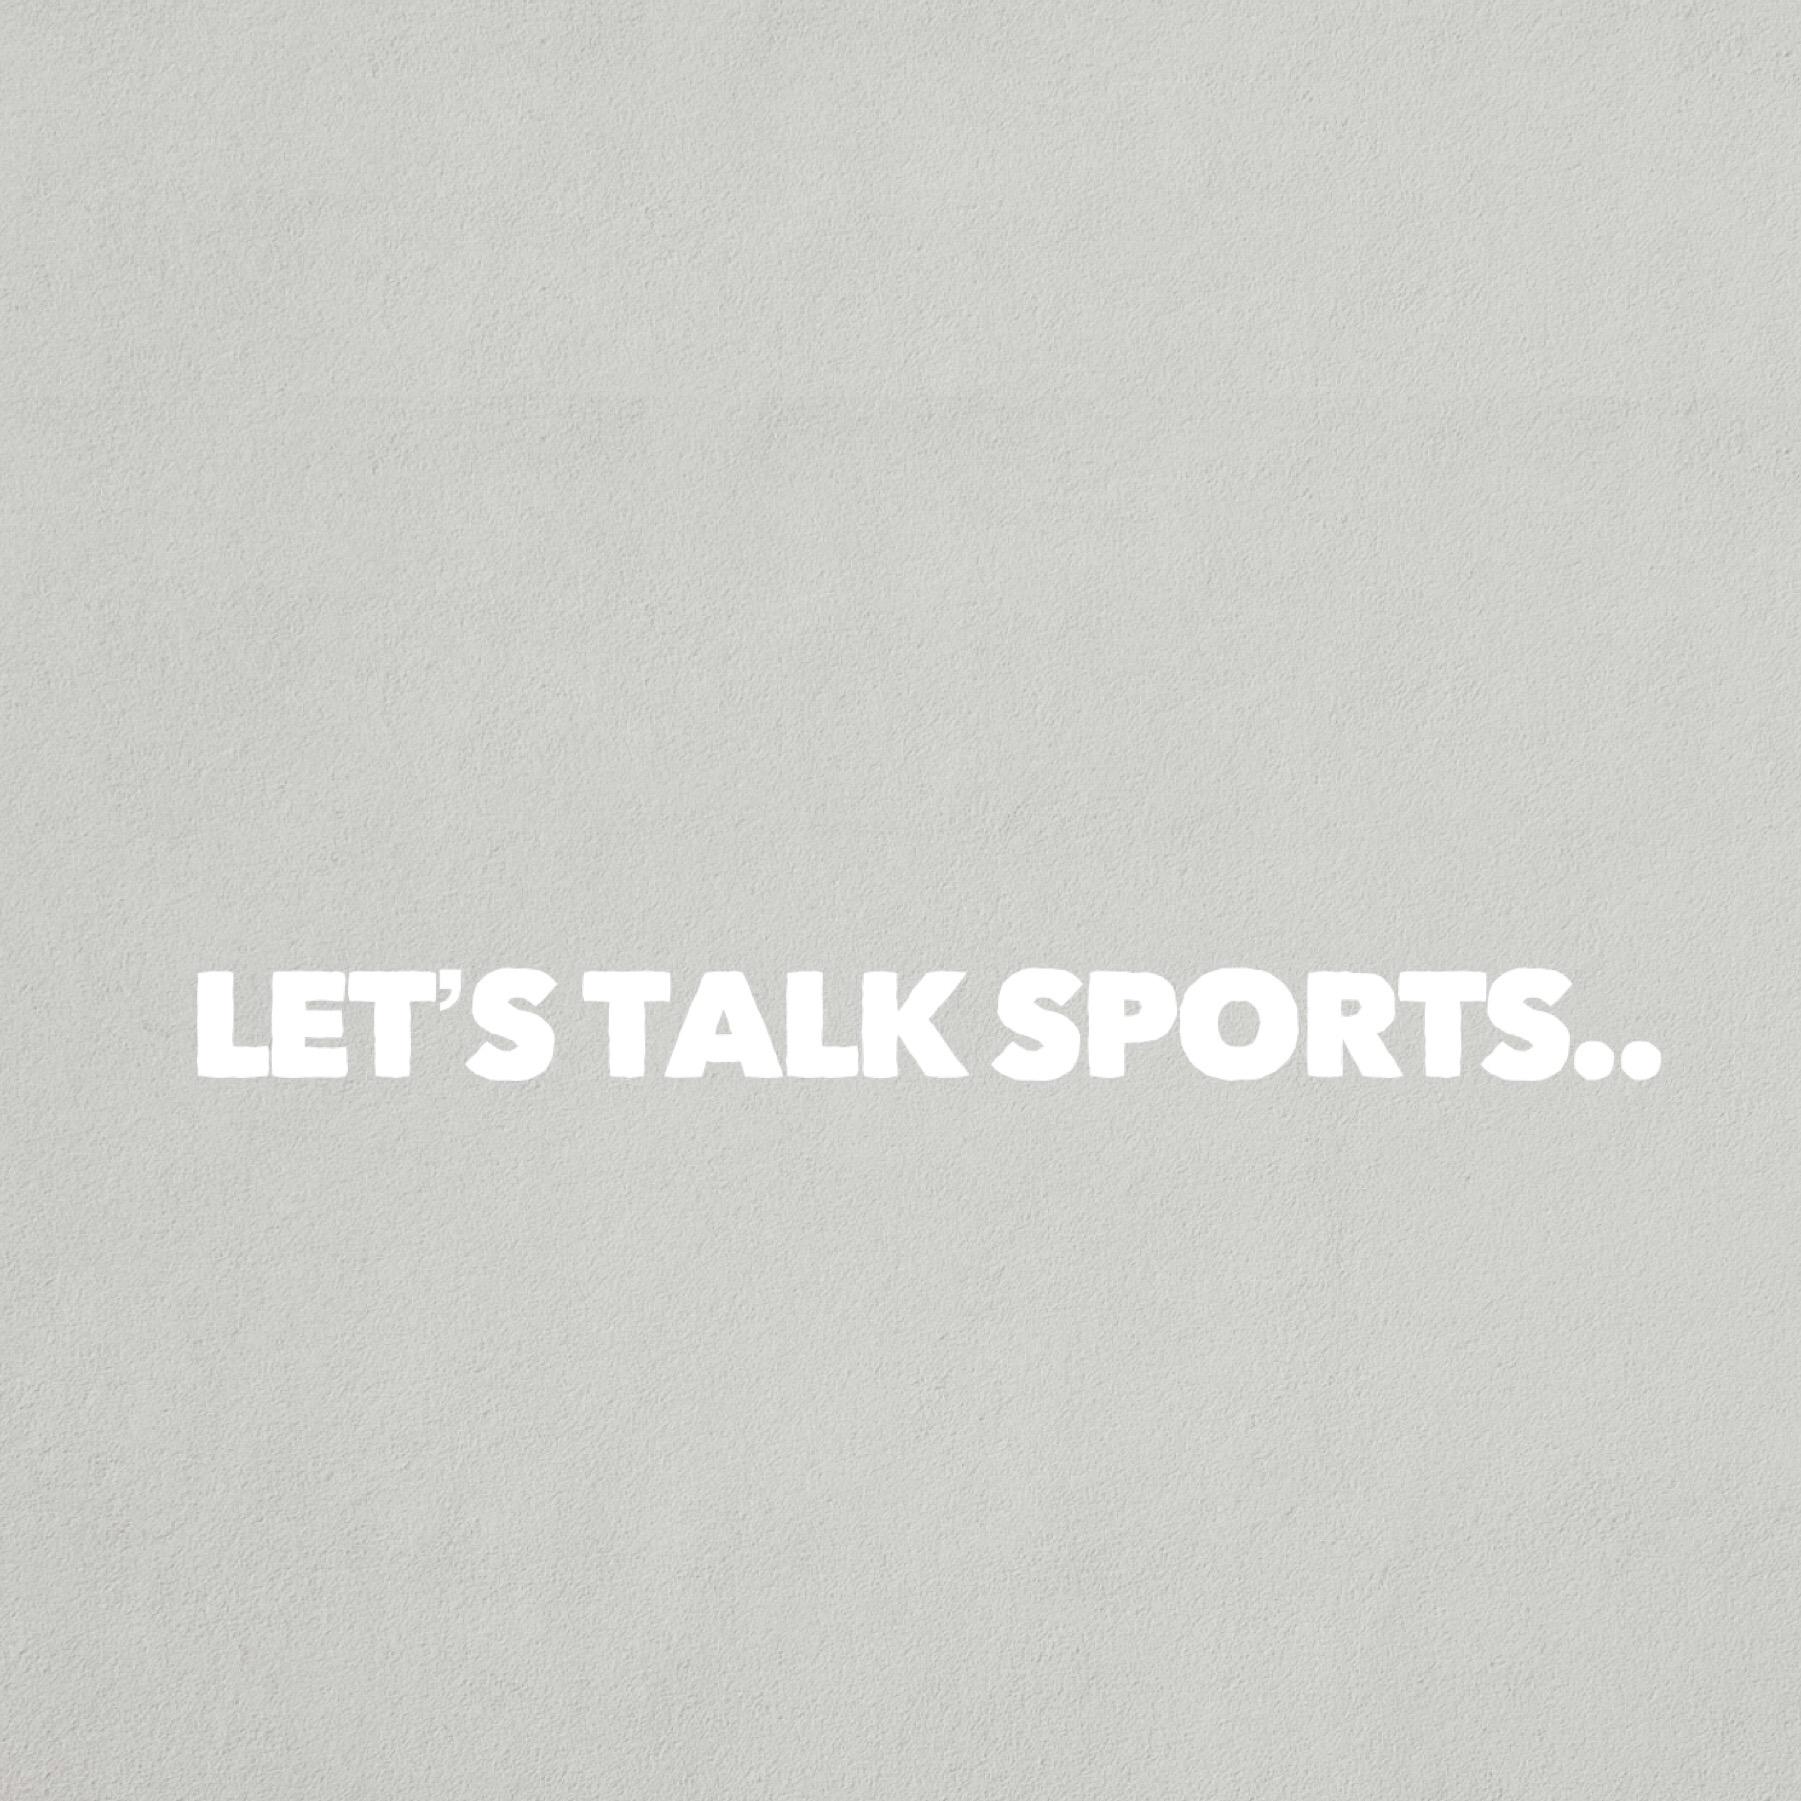 Let’s Talk Sports..